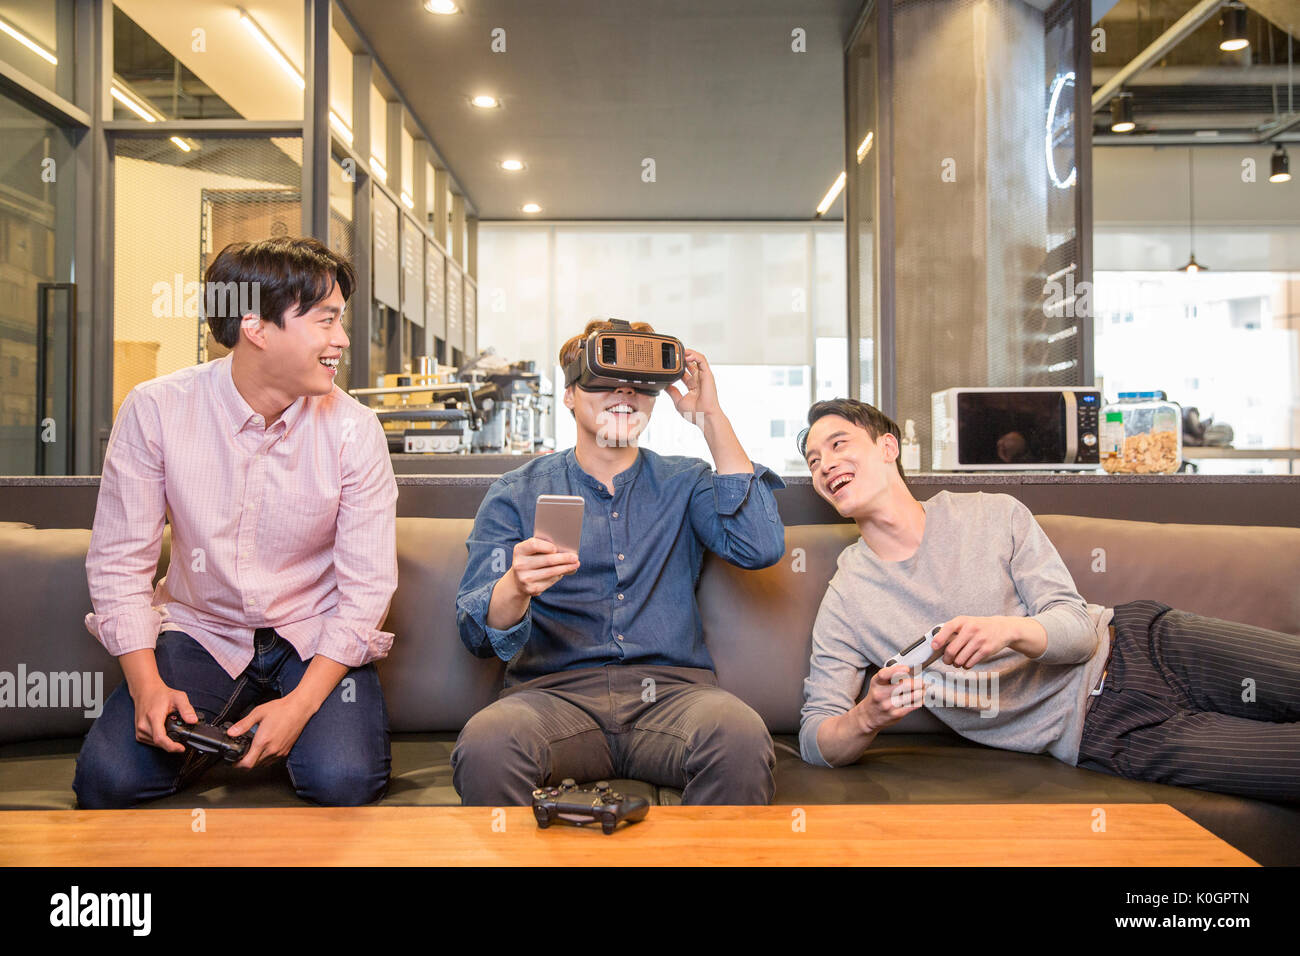 Three smiling businessmen enjoying virtual reality games Stock Photo